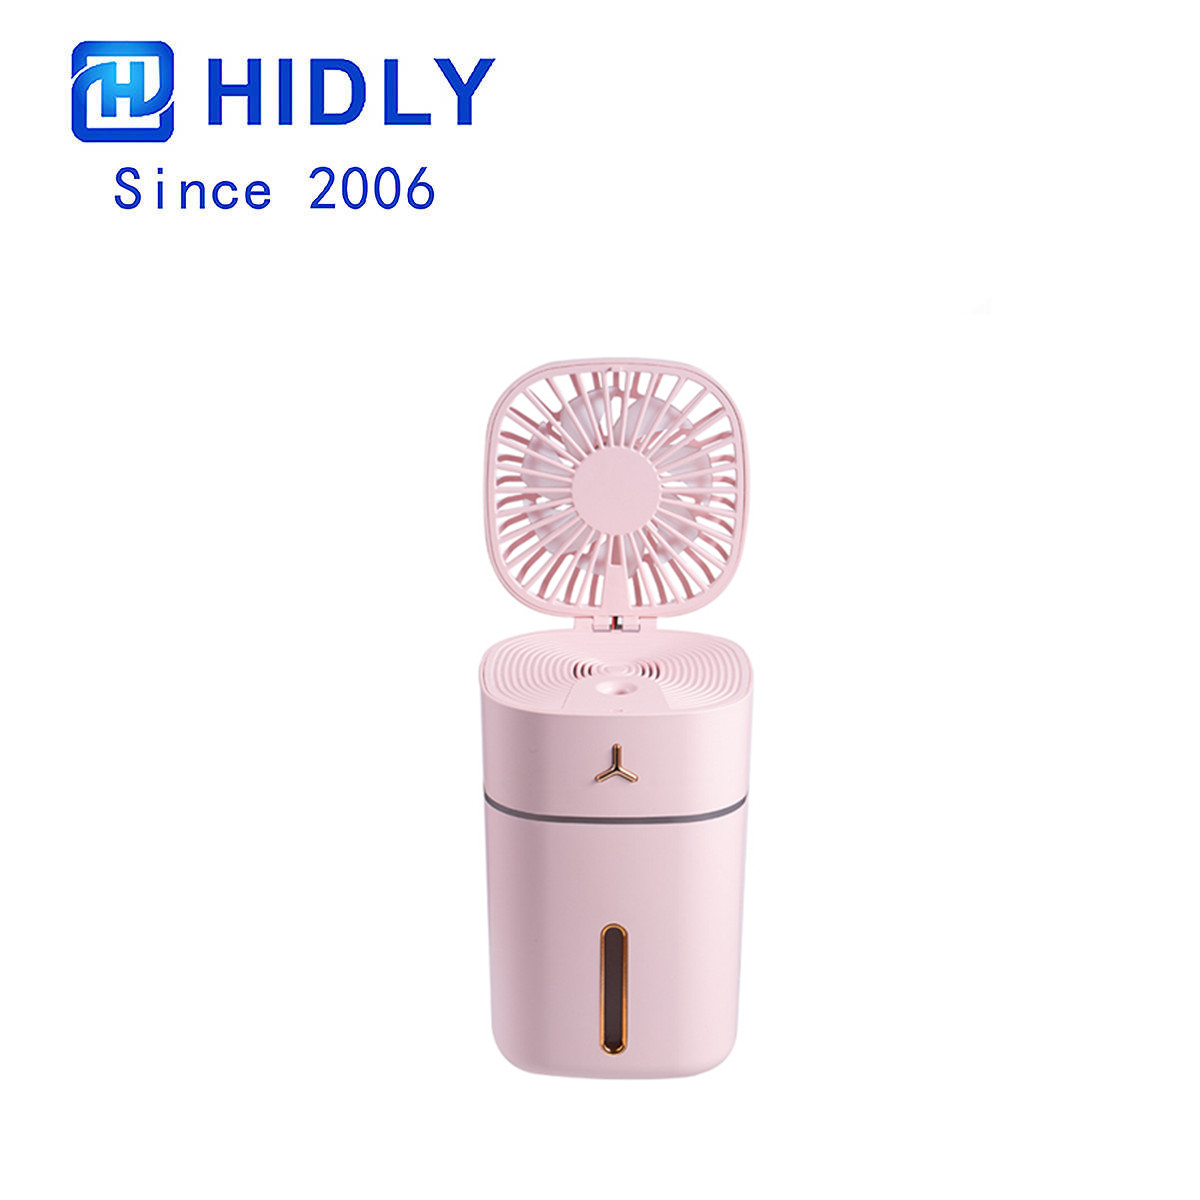 MIni Humidifier Fan-H809